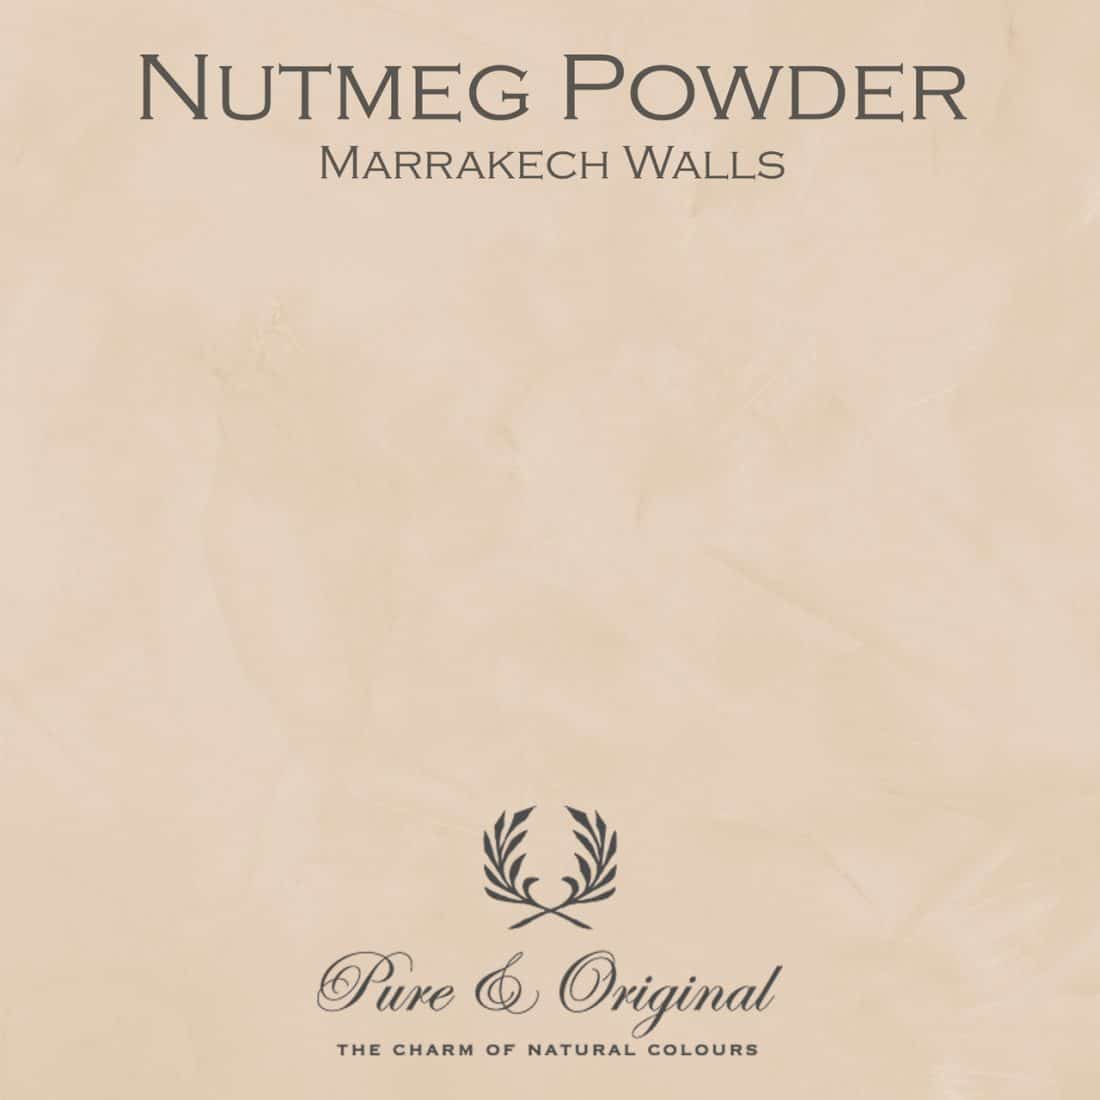 Nutmeg Powder Marrakech Walls Pure Original